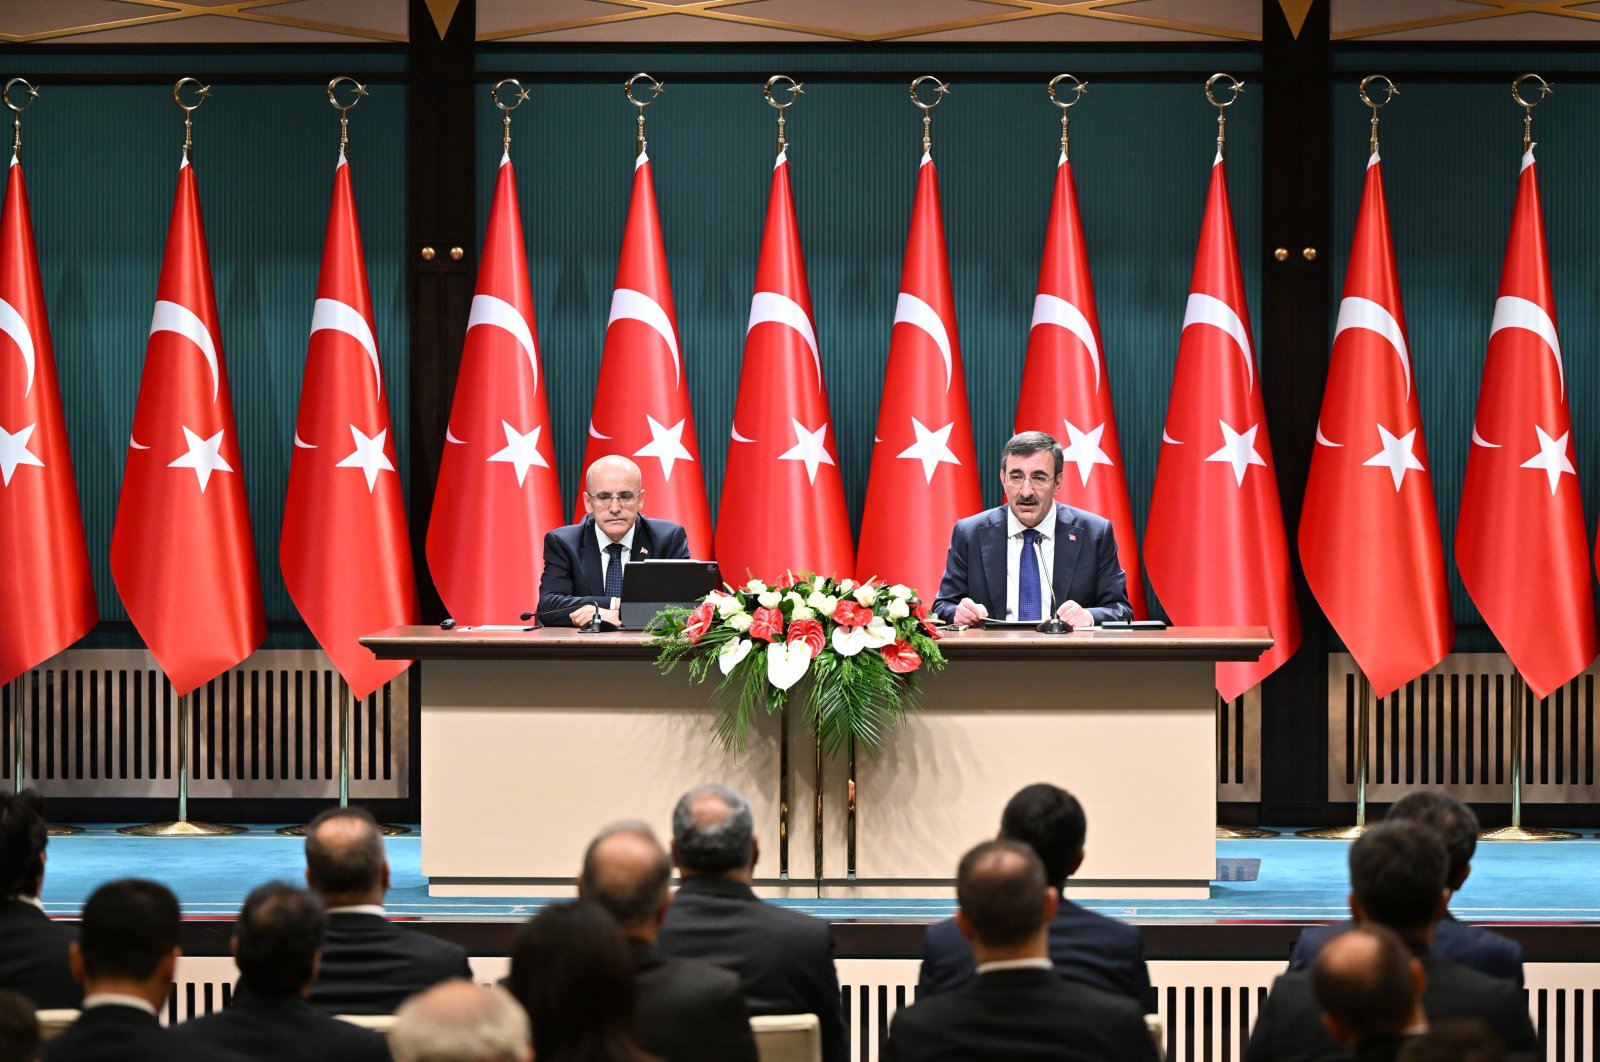 Türkiye unveils savings plan to tackle inflation, ramp up efficiency